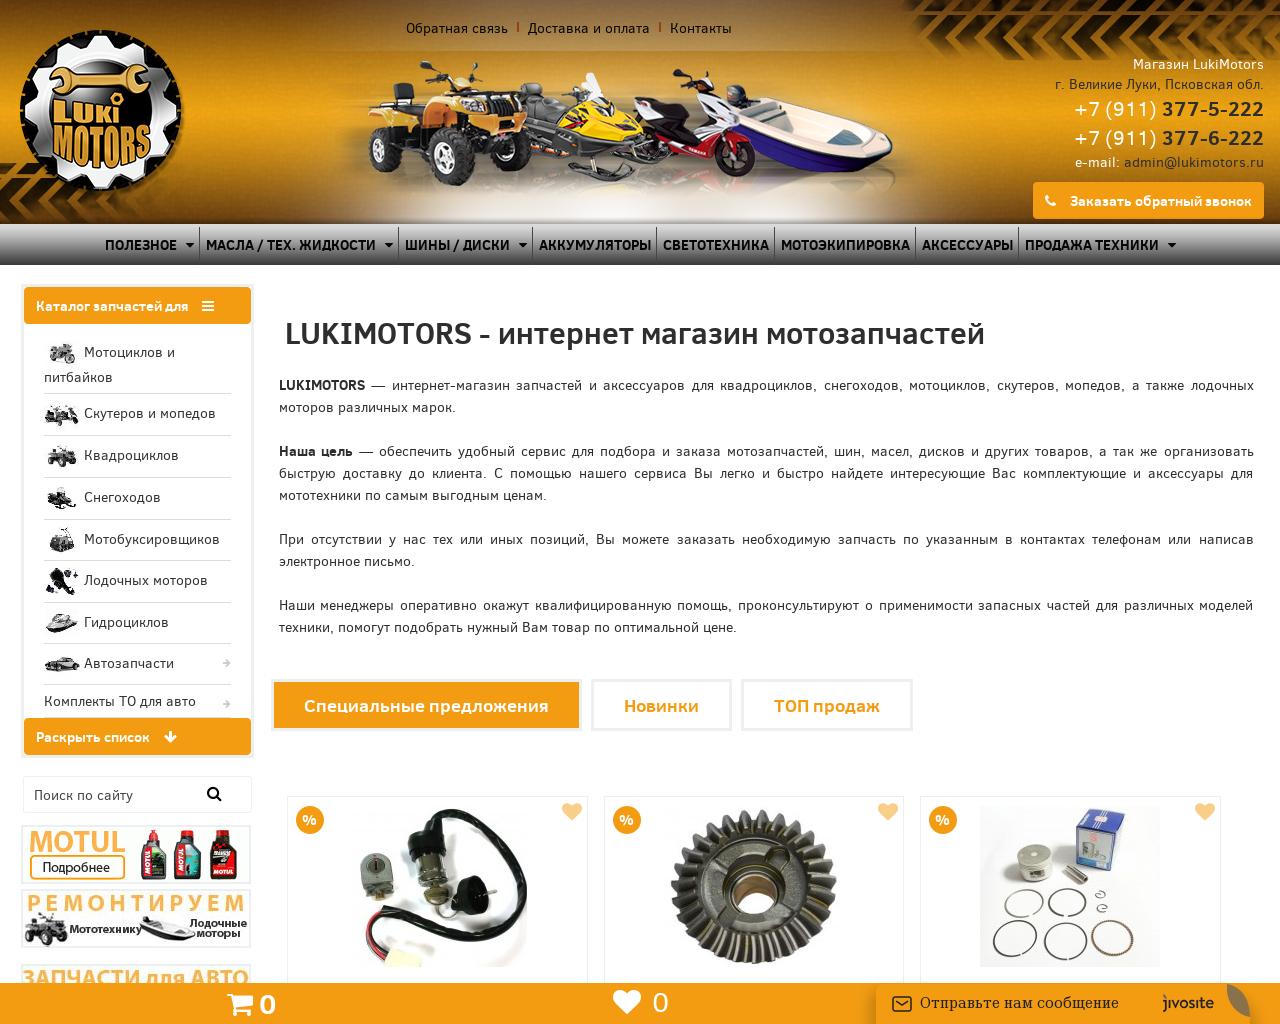 Изображение сайта lukimotors.ru в разрешении 1280x1024